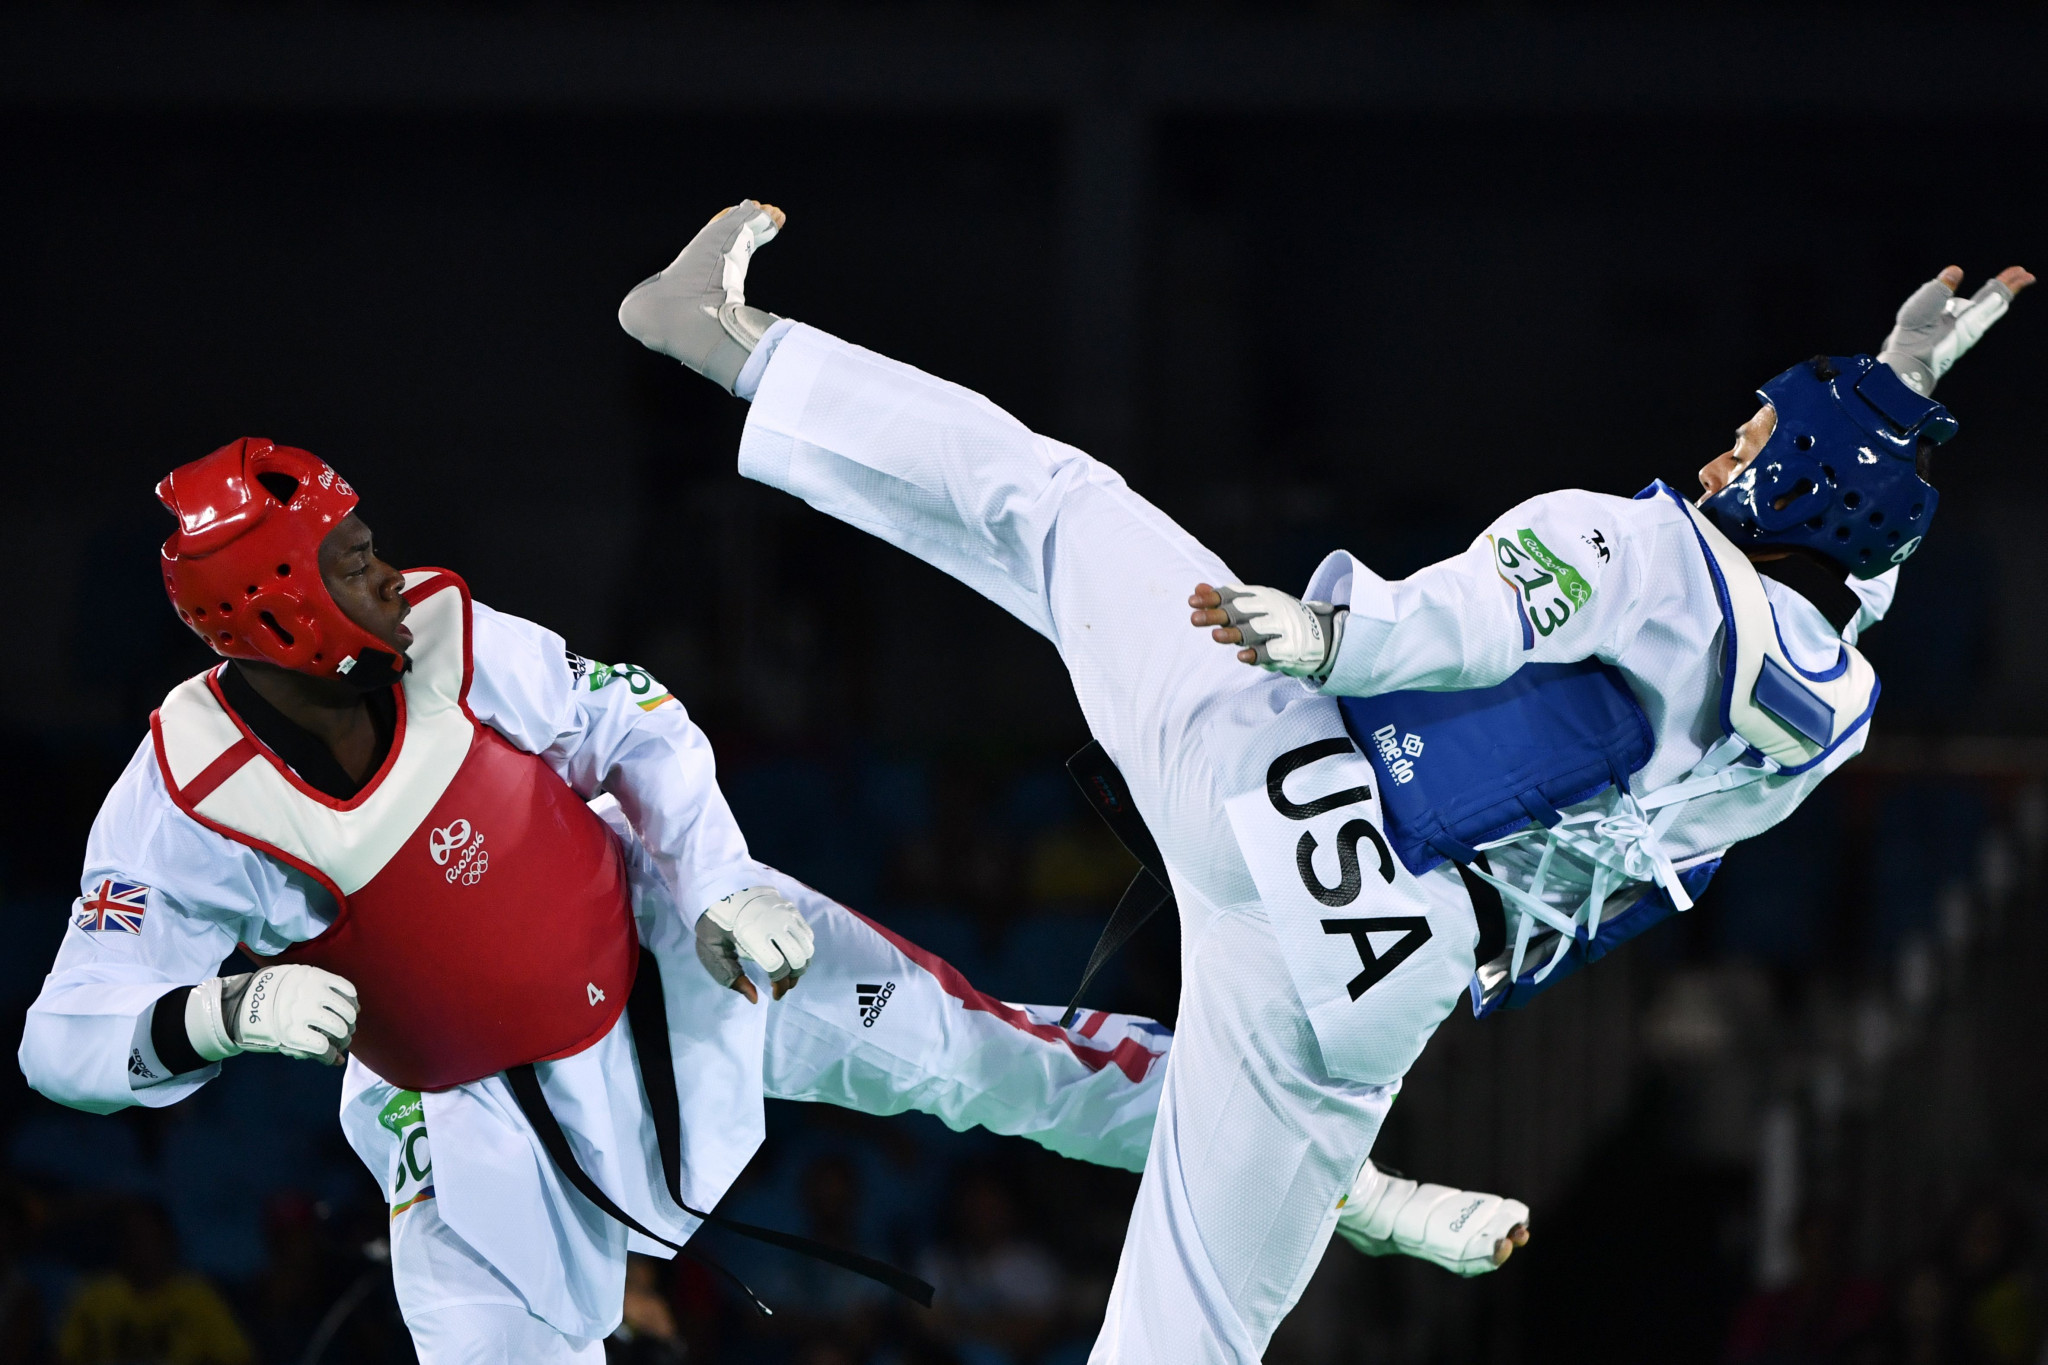 USA Taekwondo coach Laurin selected for IOC coaching programme 